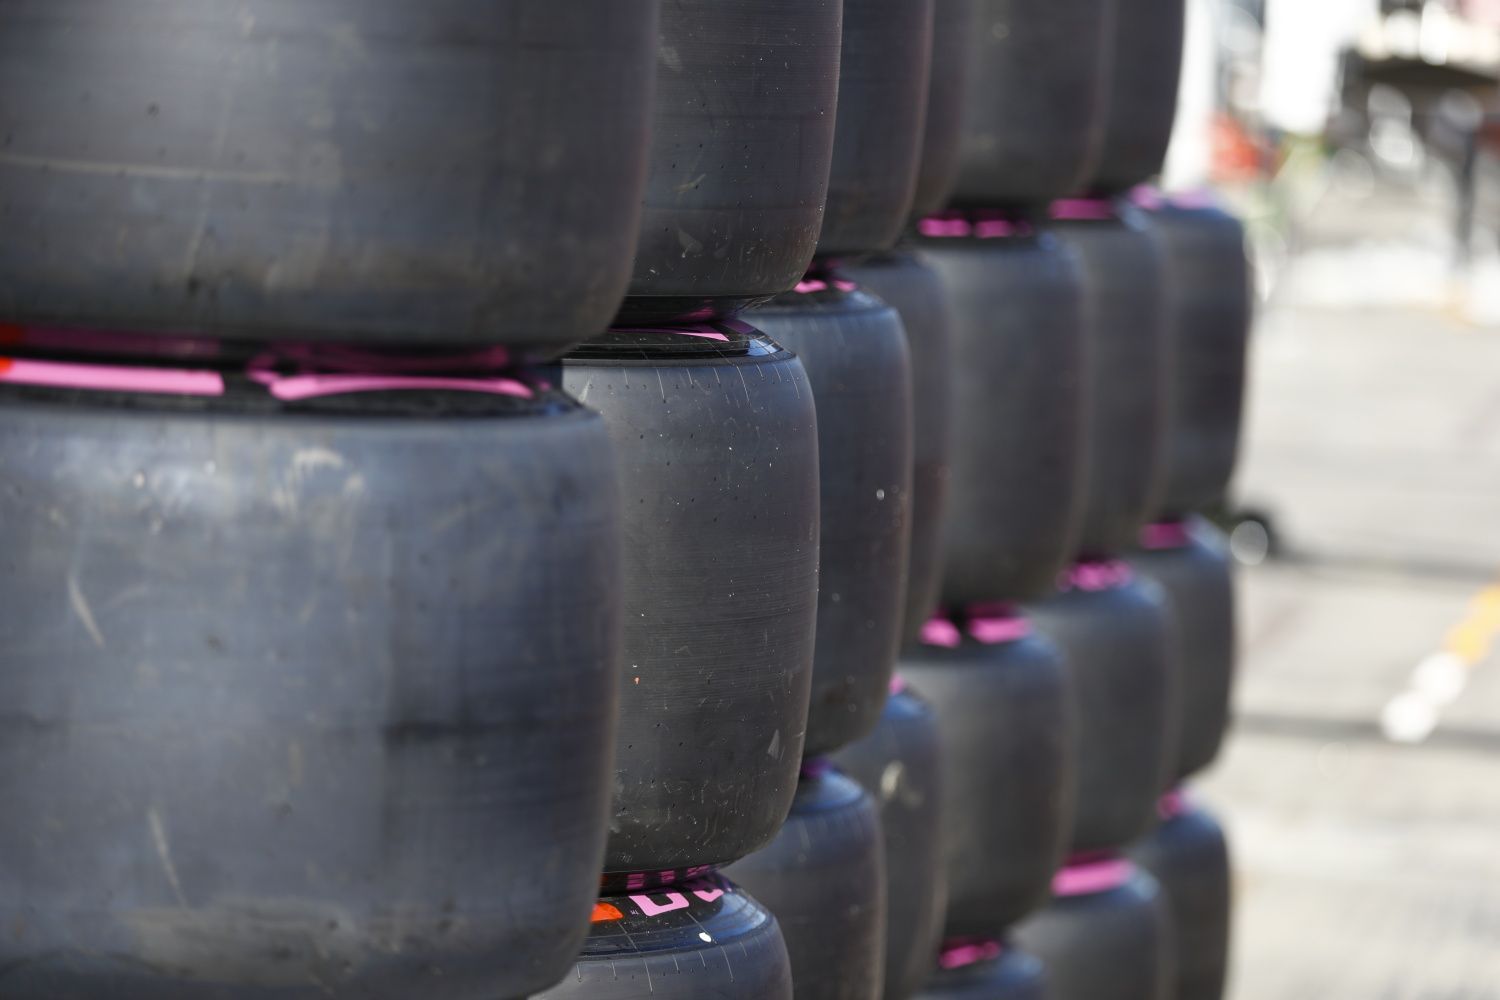 F1, VC Austrálie 2017: pneumatiky Pirelli